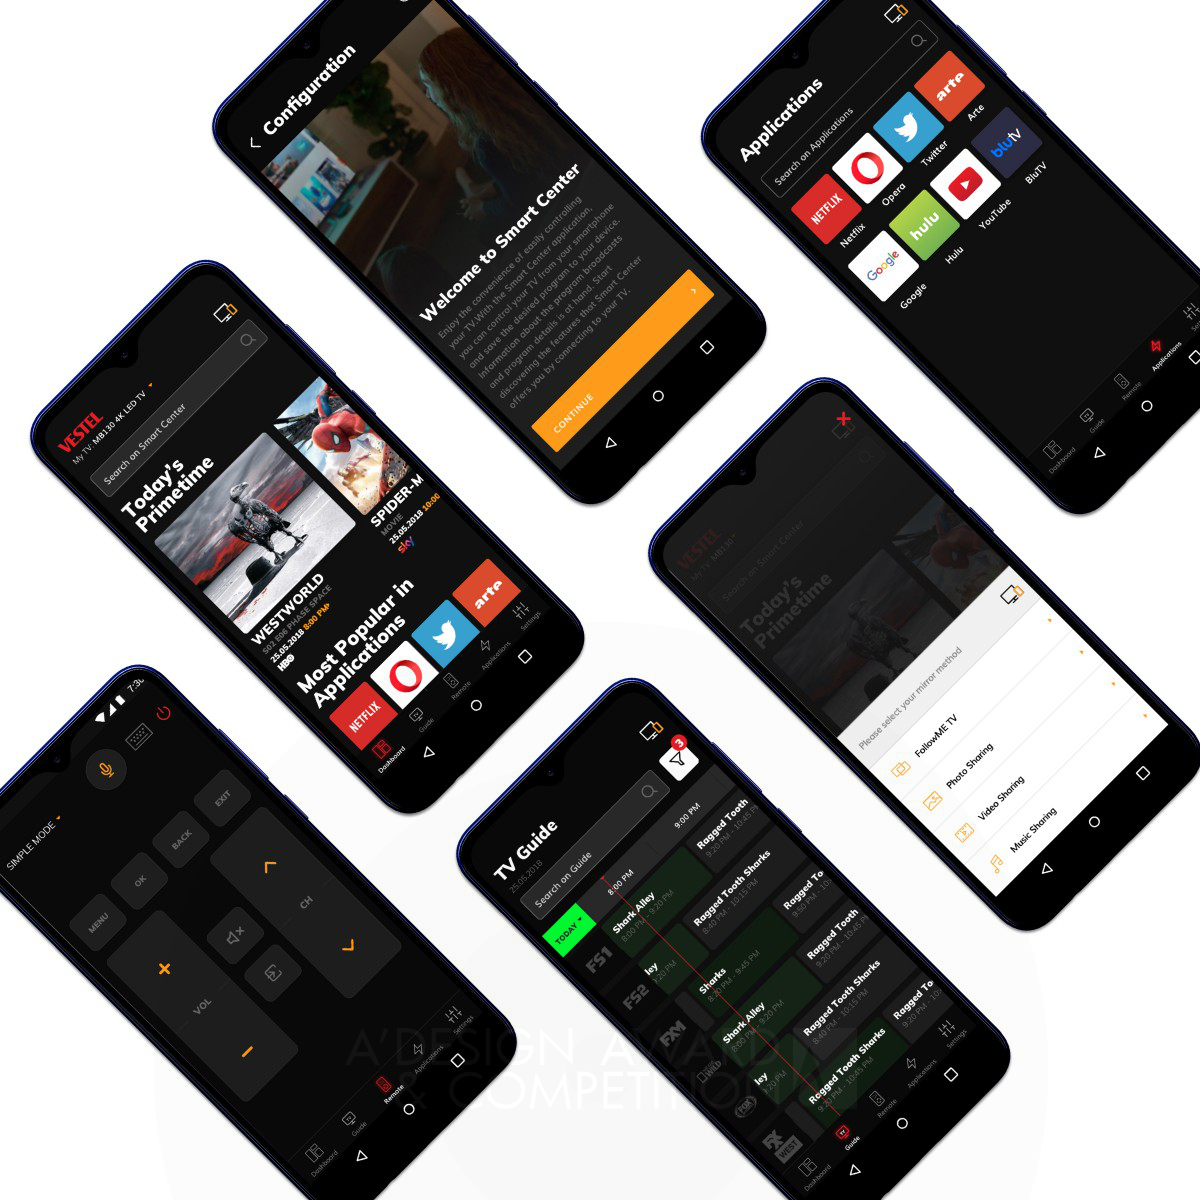 Vestel Smart Center: Redefining TV Control with Innovative Mobile App